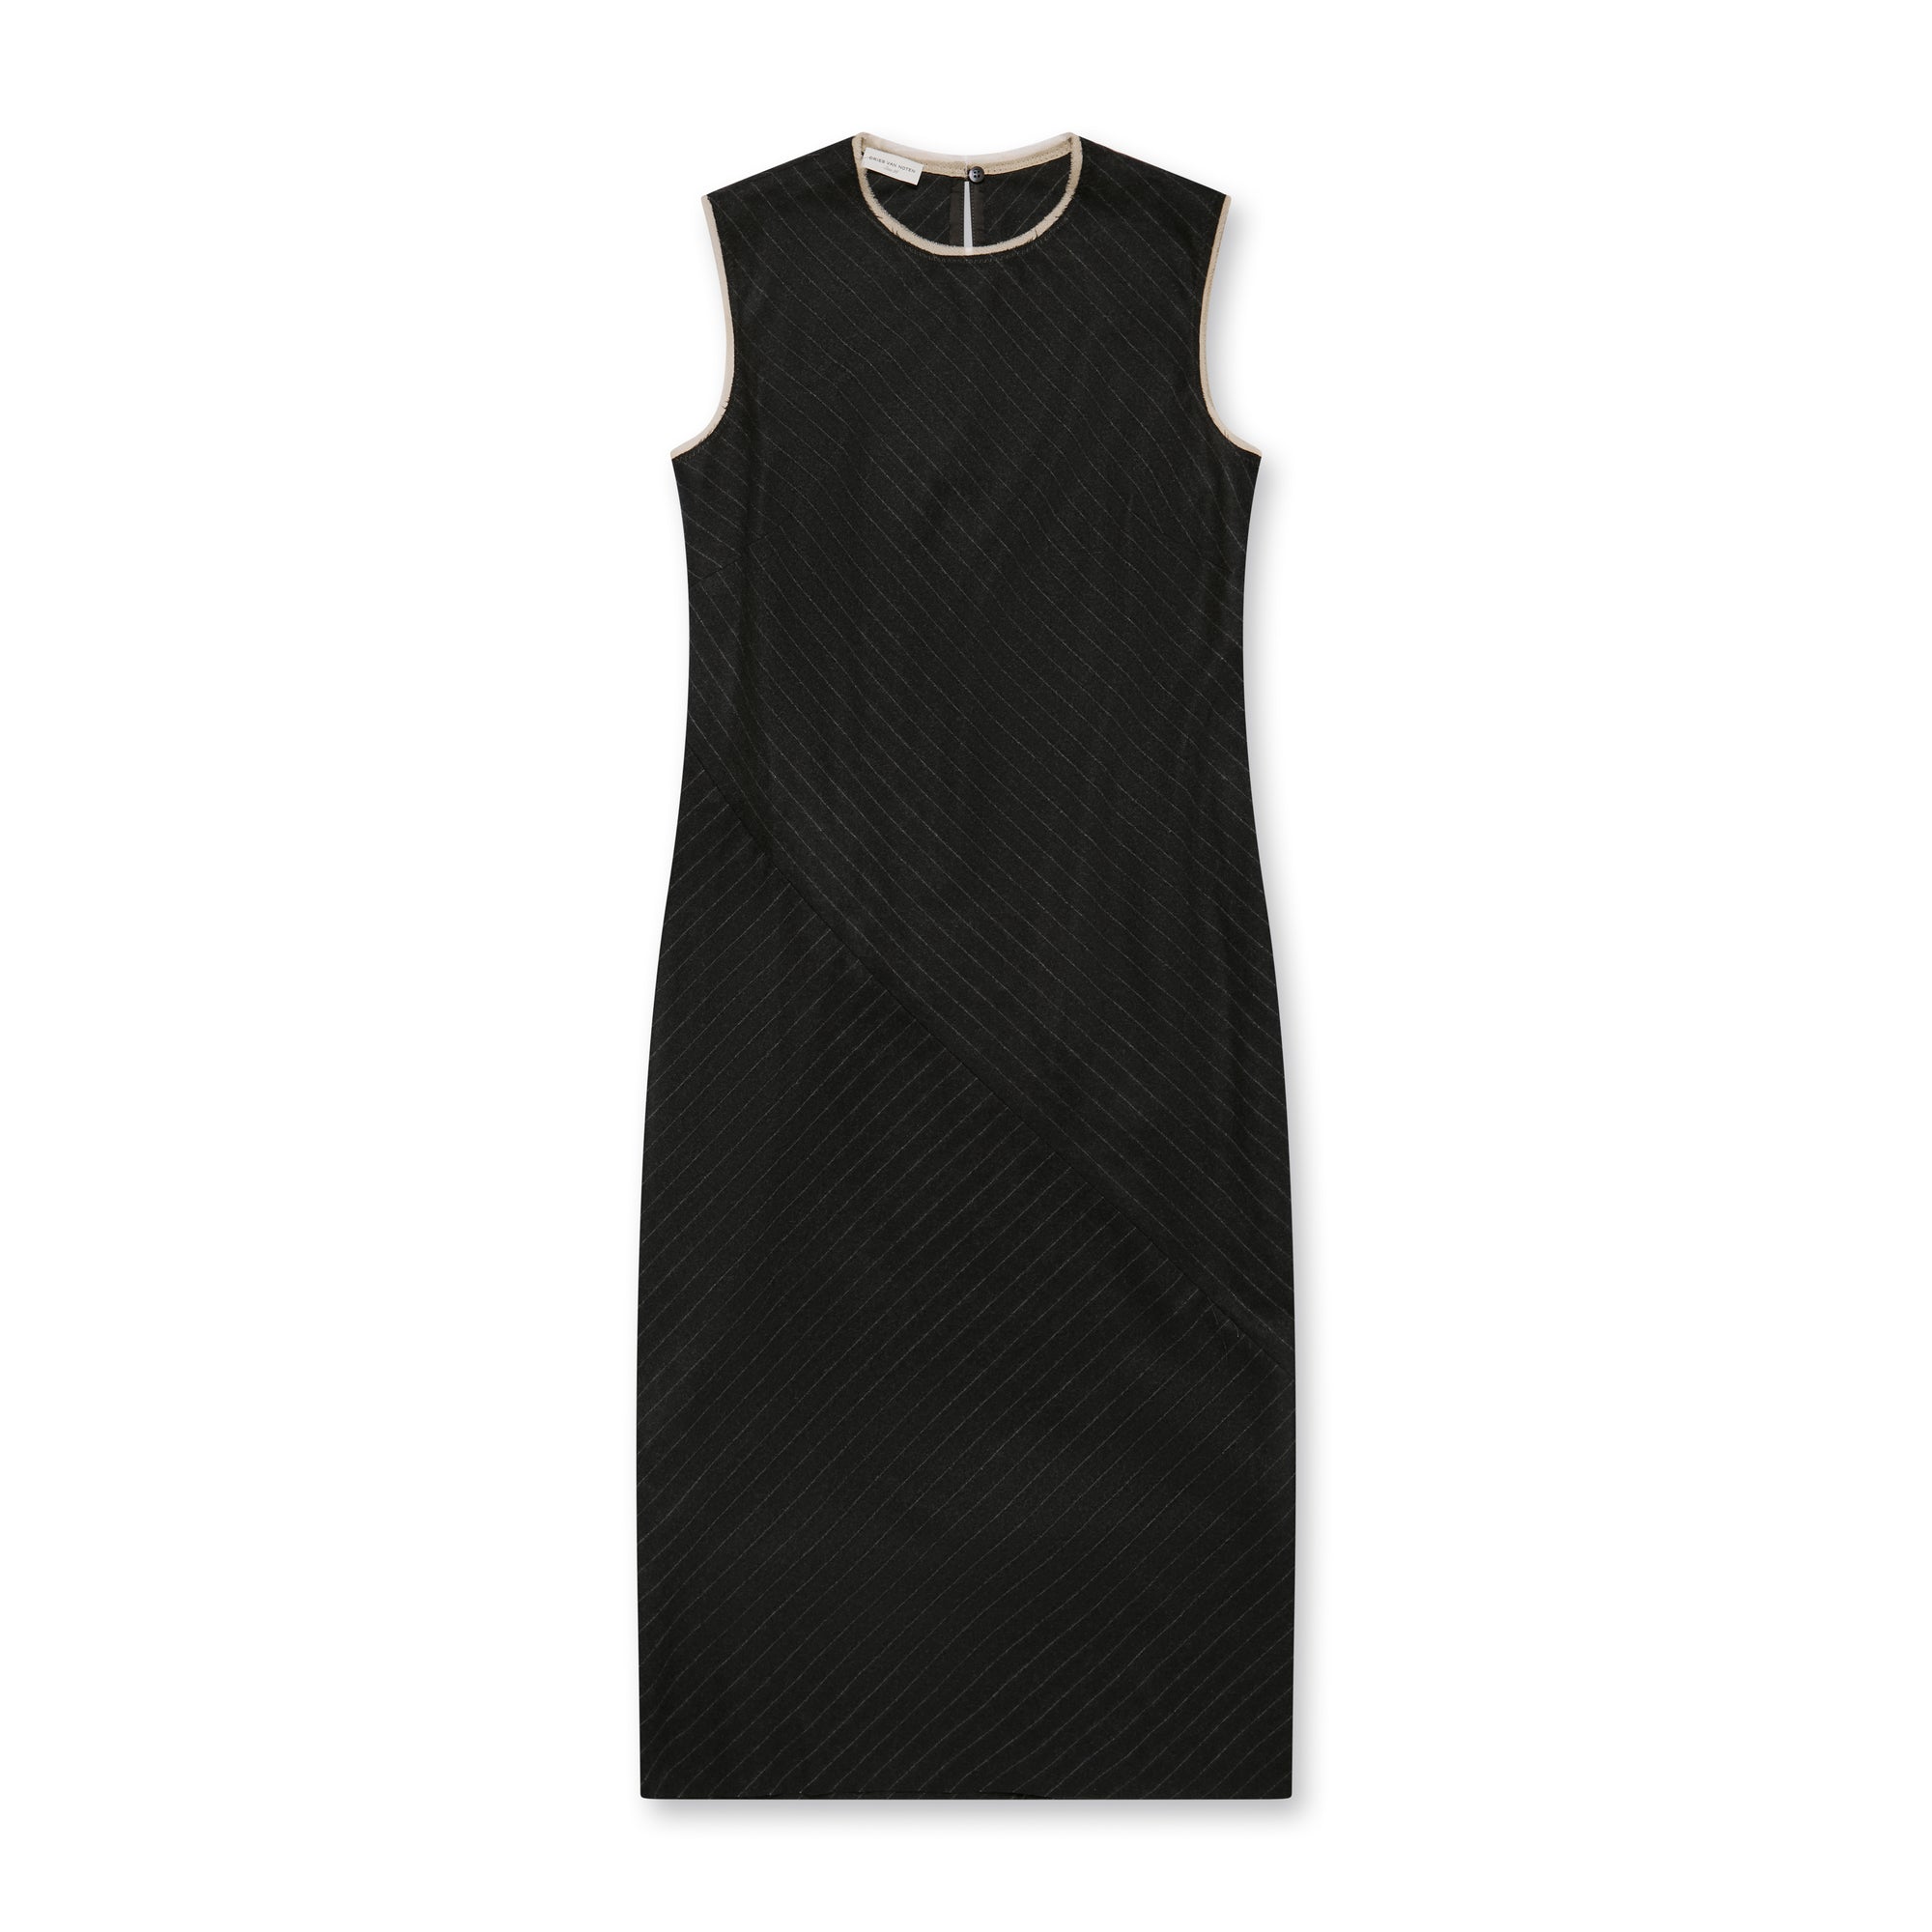 Dries Van Noten - Women’s Pinstripe Dress - (Anthracite) view 4